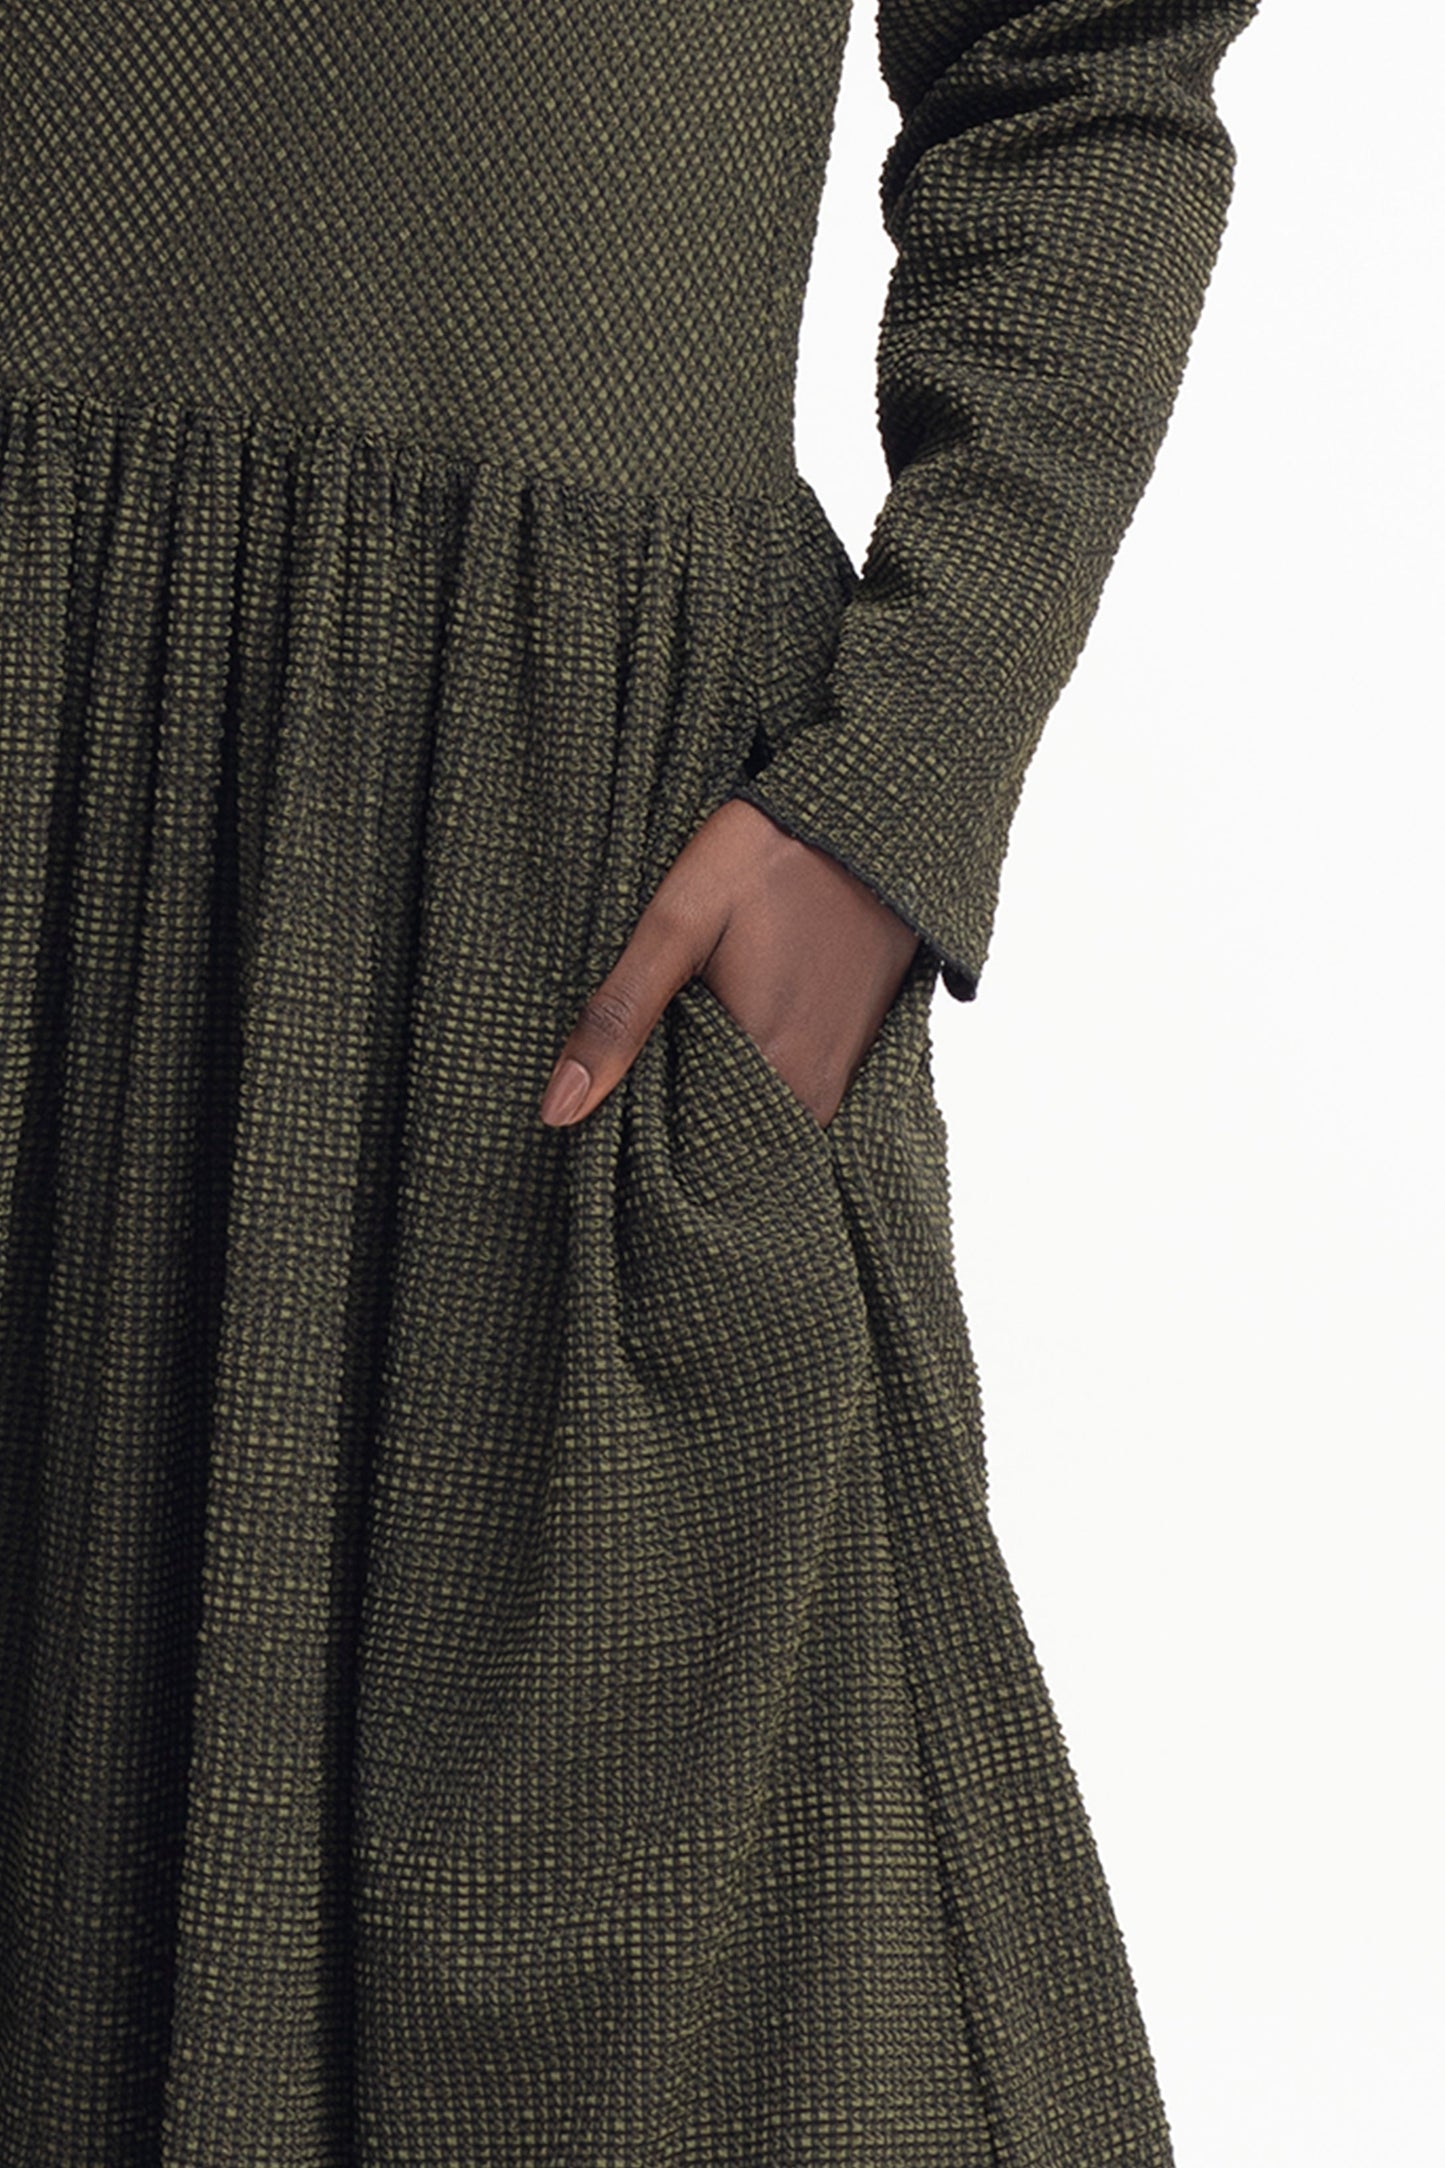 Bubbel Textured Seersucker-like Long Sleeve V-neck Long Dress Model detail | OLIVE CHECK